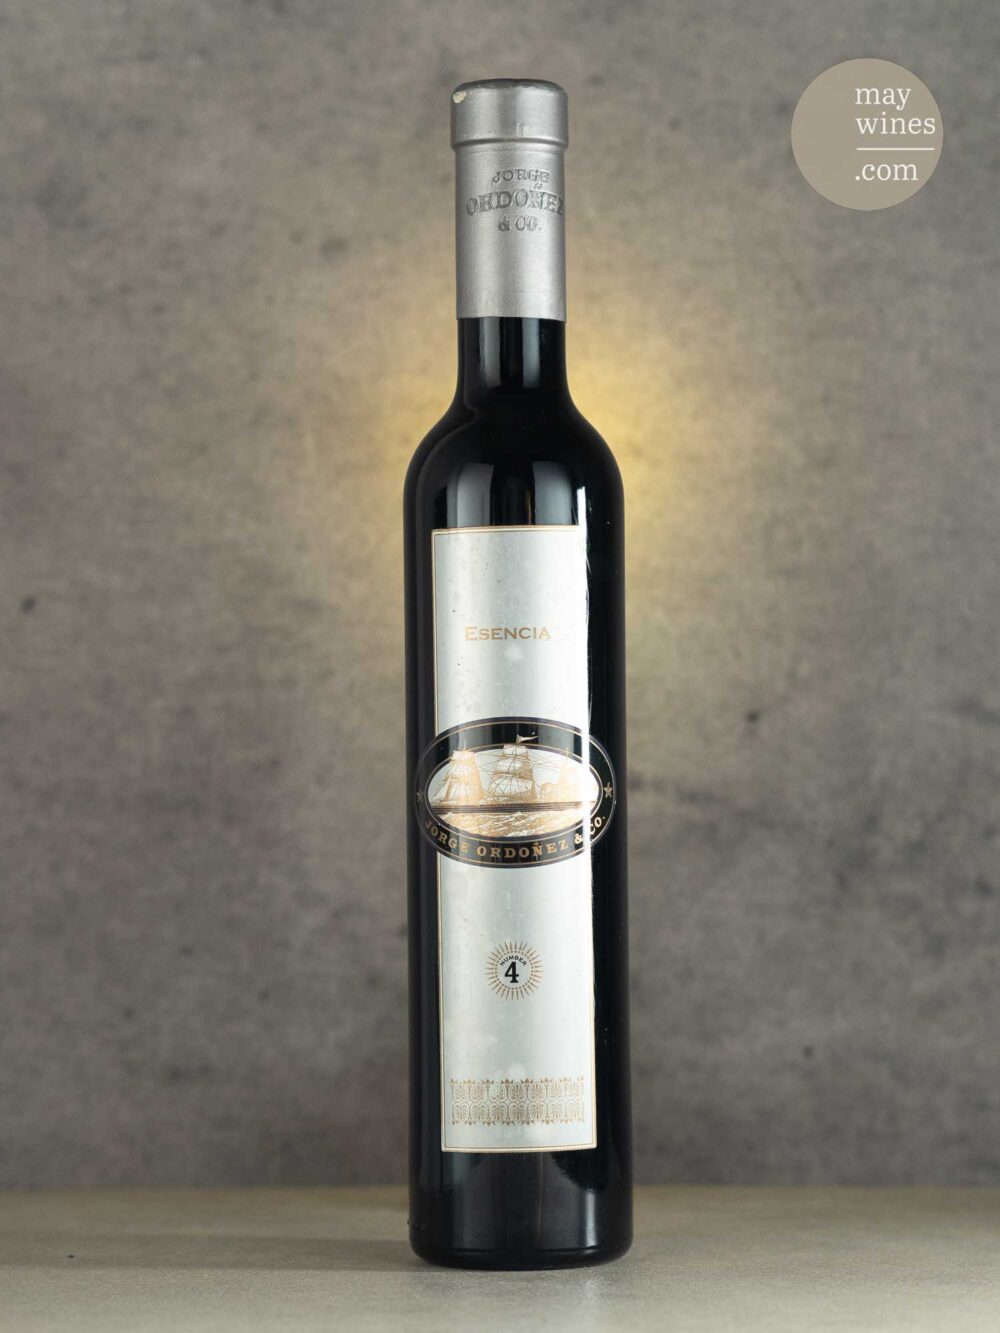 May Wines – Süßwein – 2004 Esencia No. 4 - Jorge Ordonez & Co.